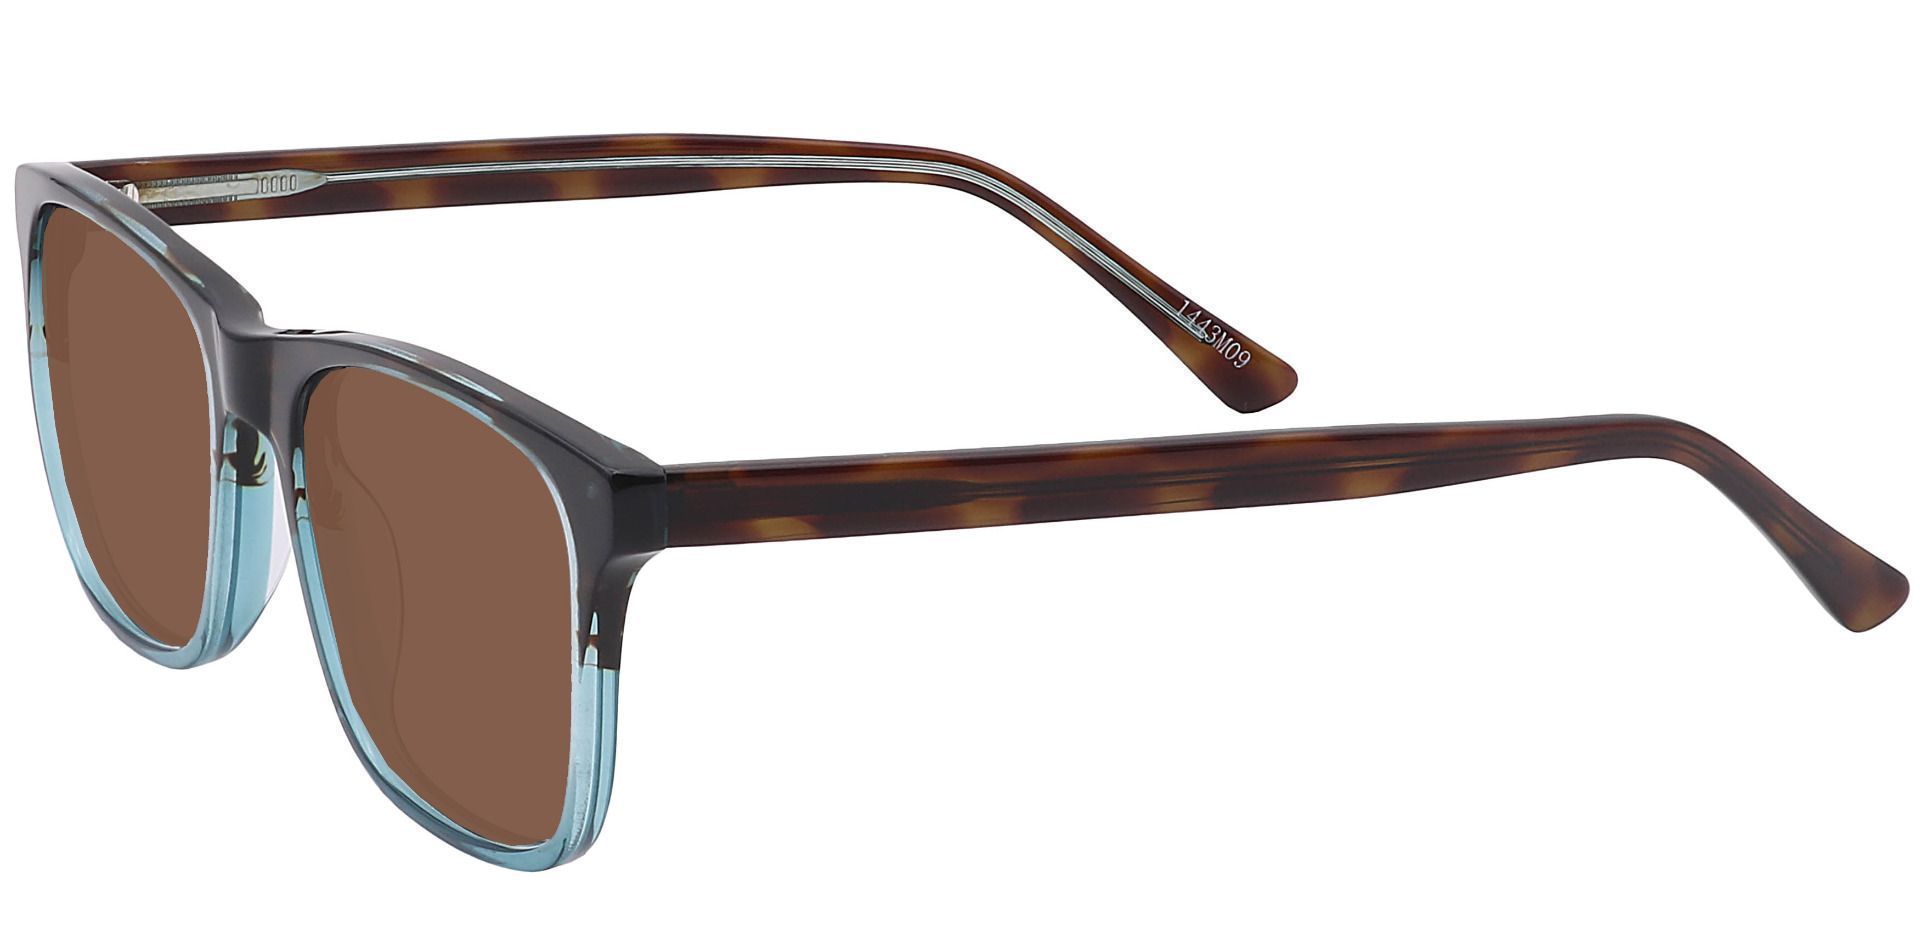 Cantina Square Progressive Sunglasses - Multi Color Frame With Brown Lenses